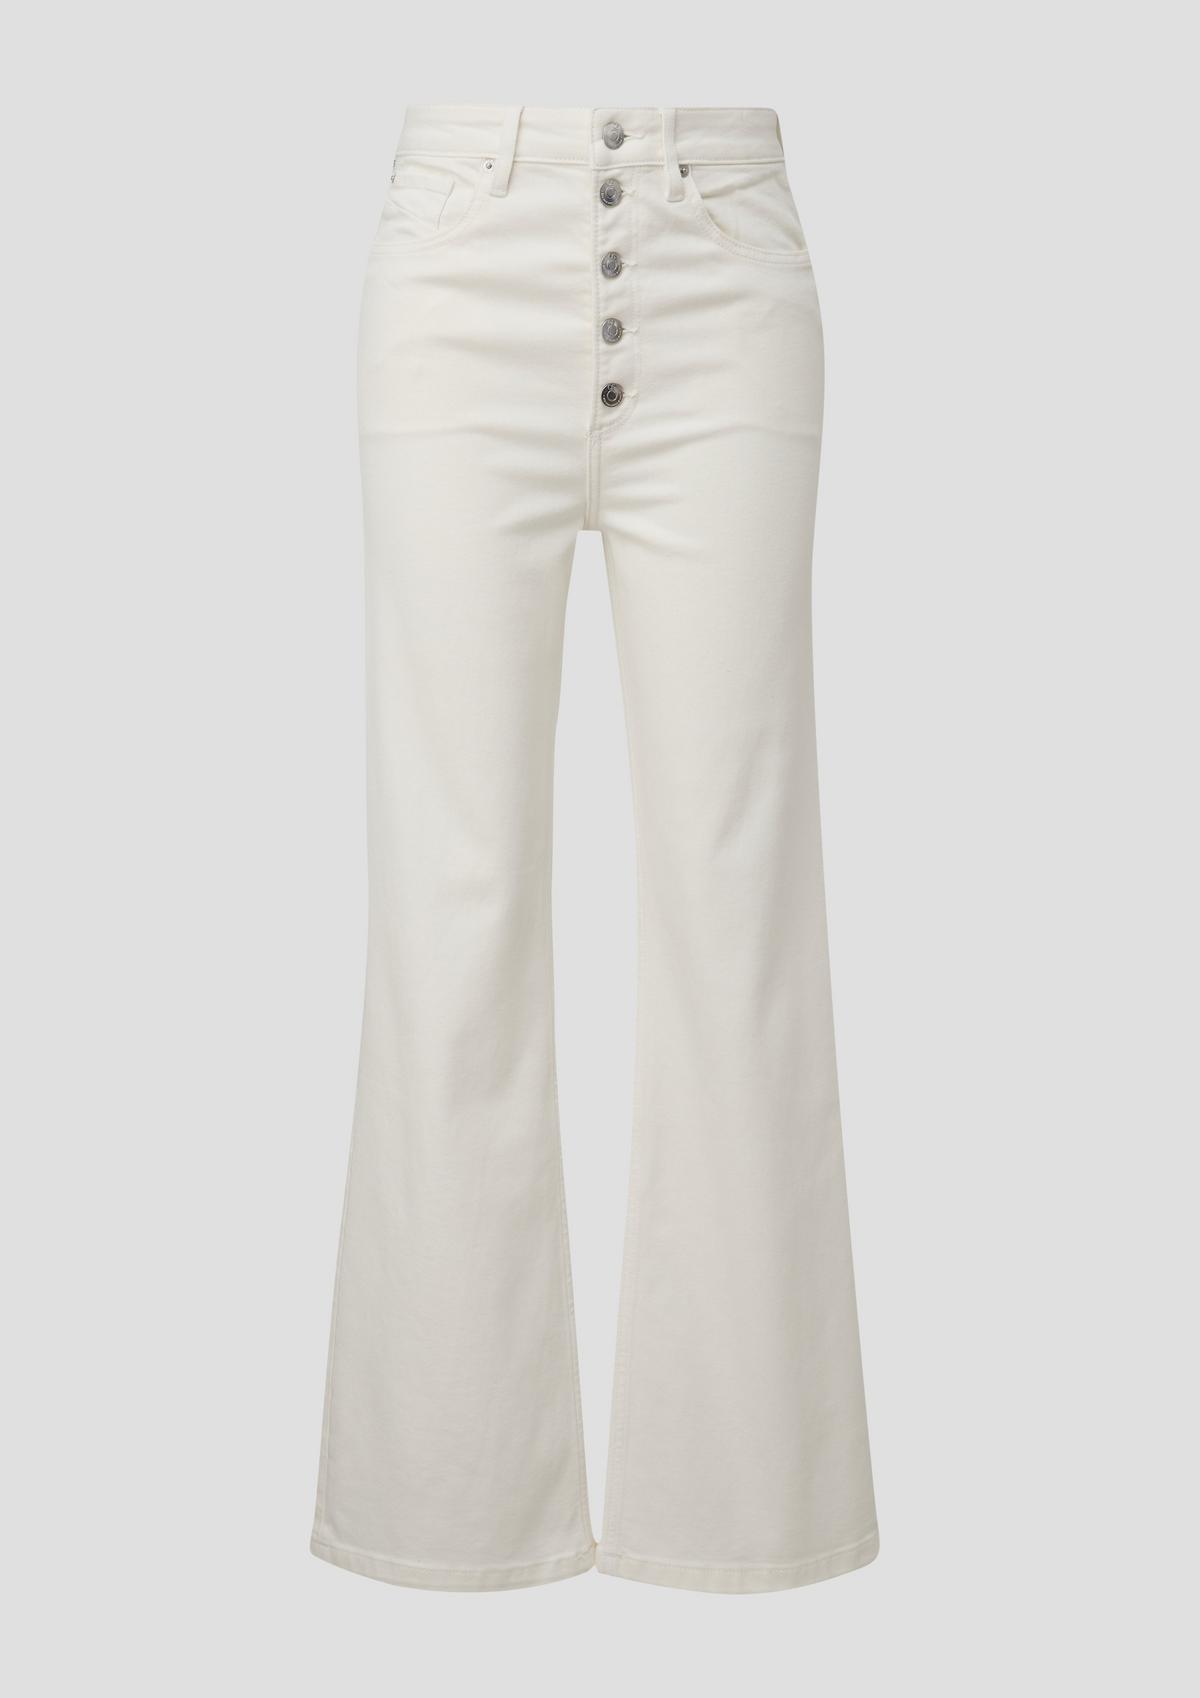 s.Oliver Catie jeans / slim fit / high rise / wide leg / button placket